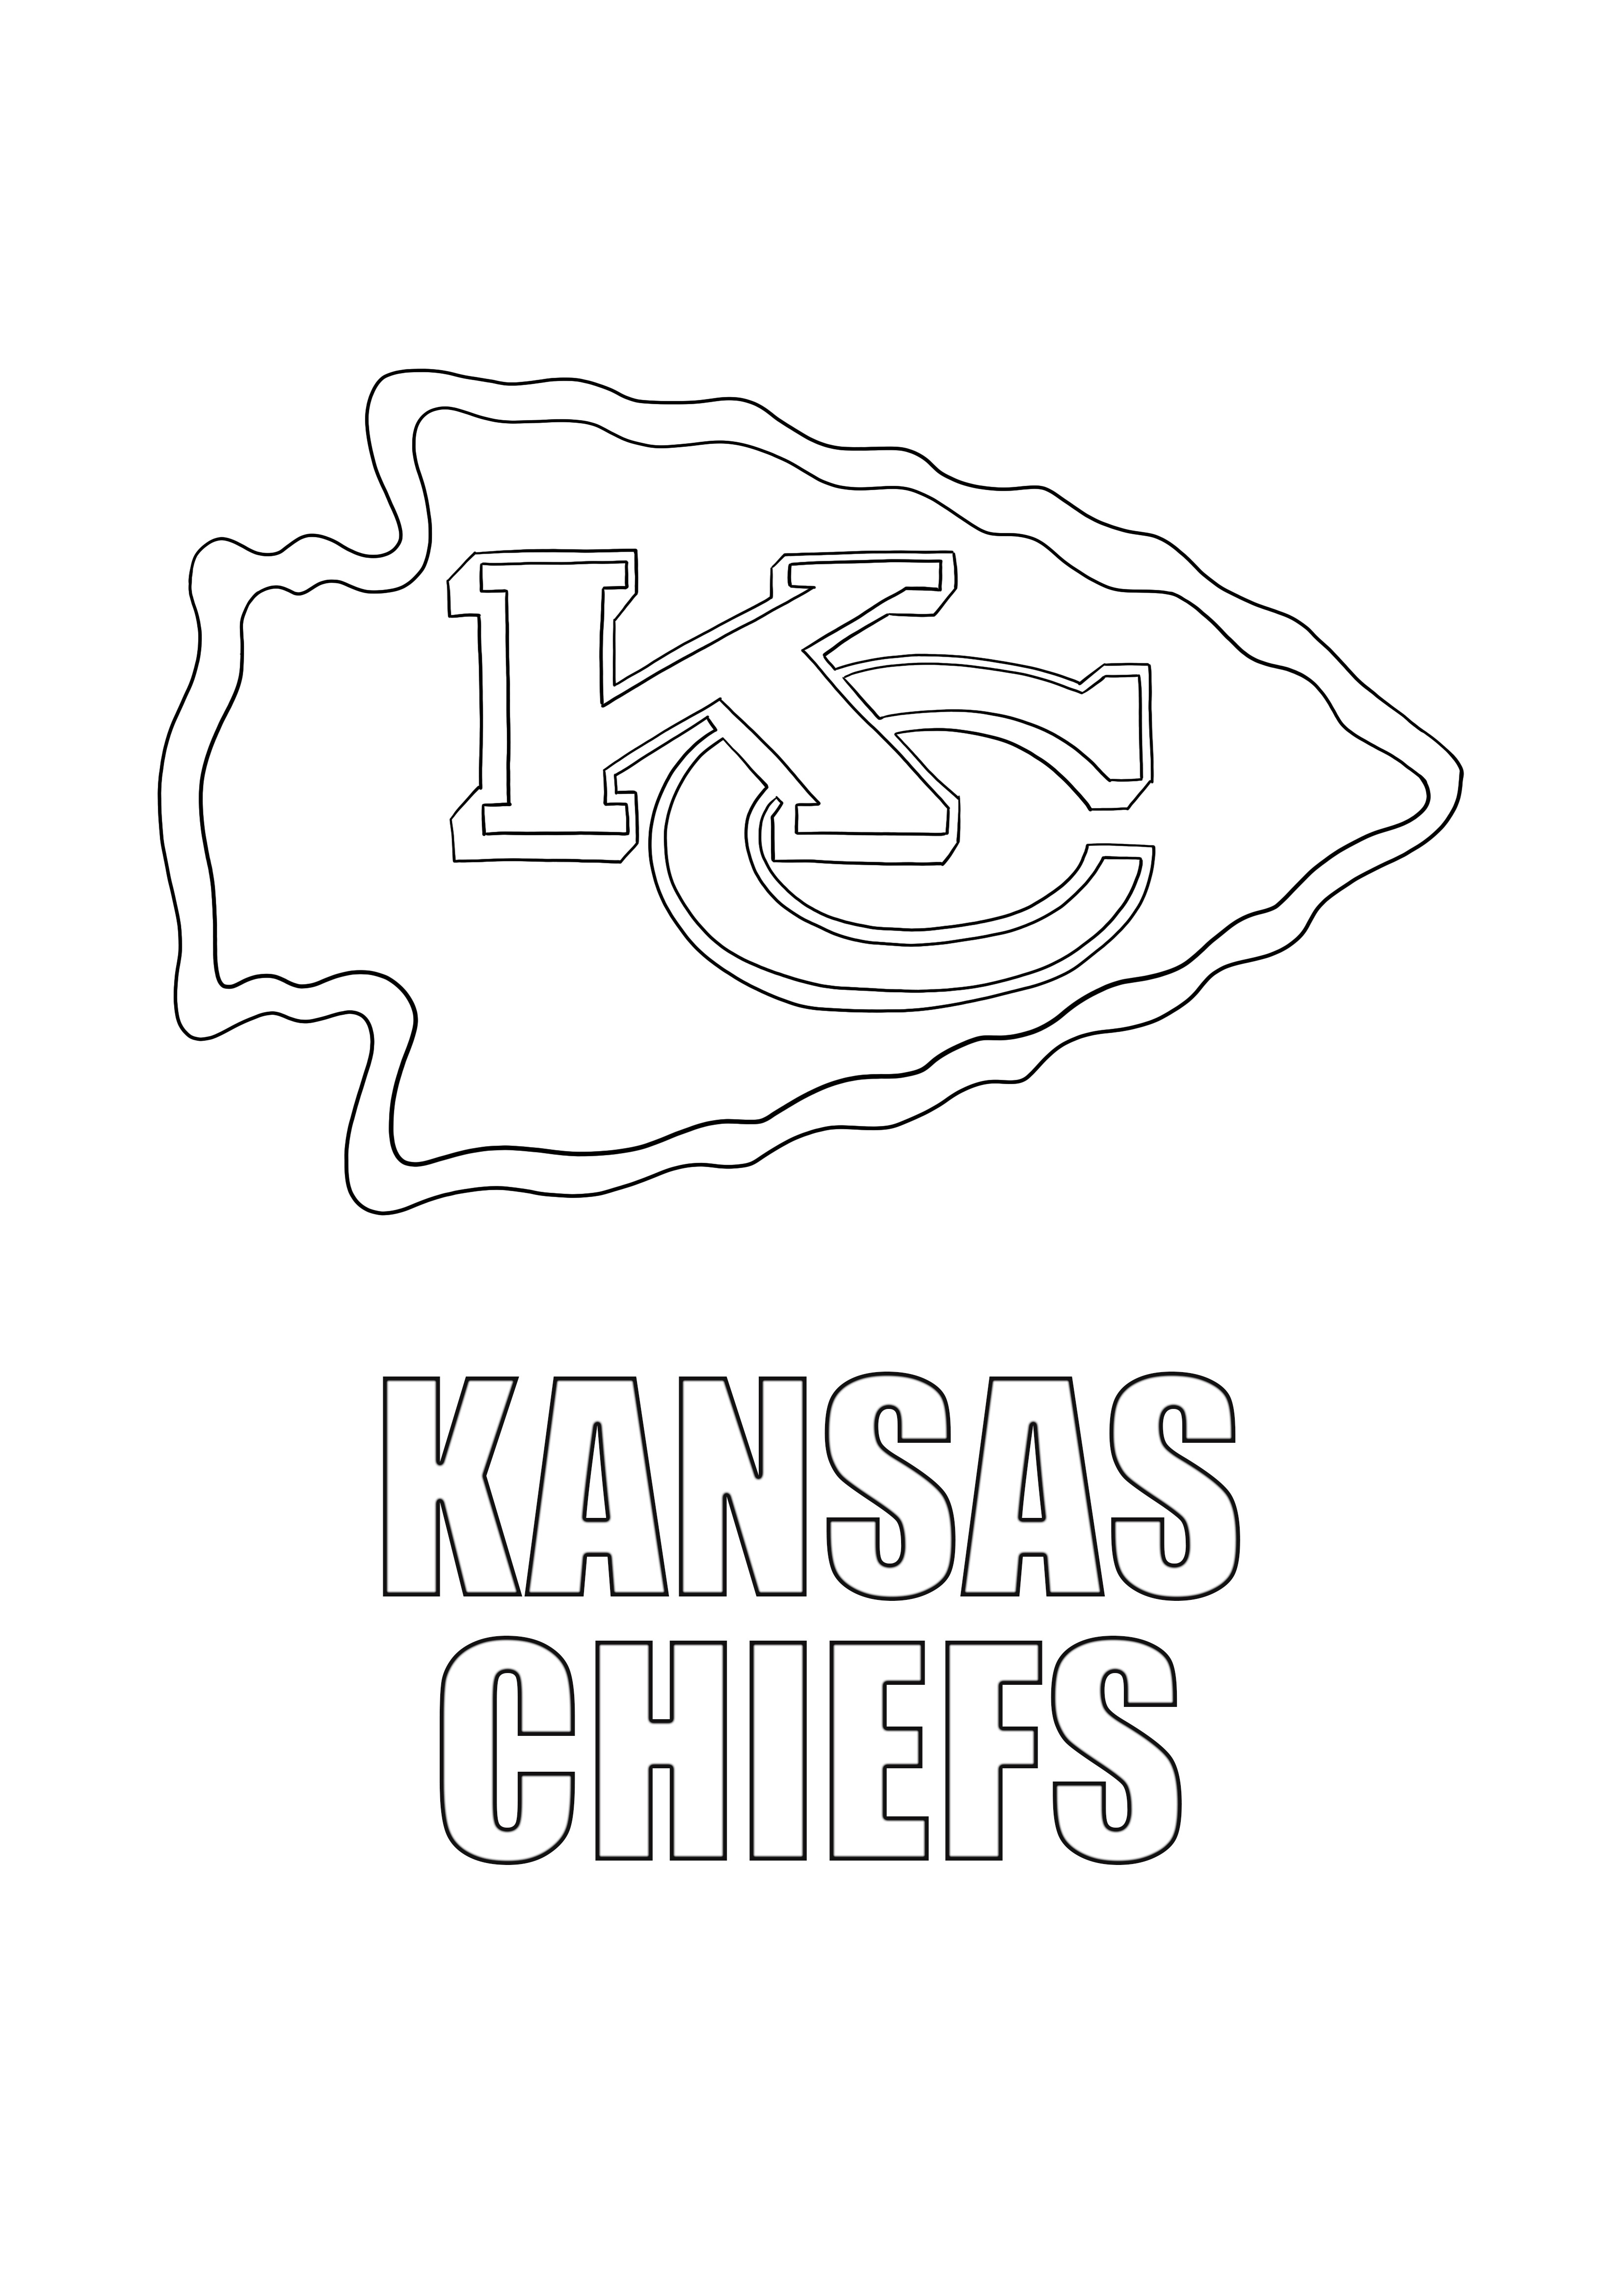 Kansas chiefs coloring and free downloading sheet